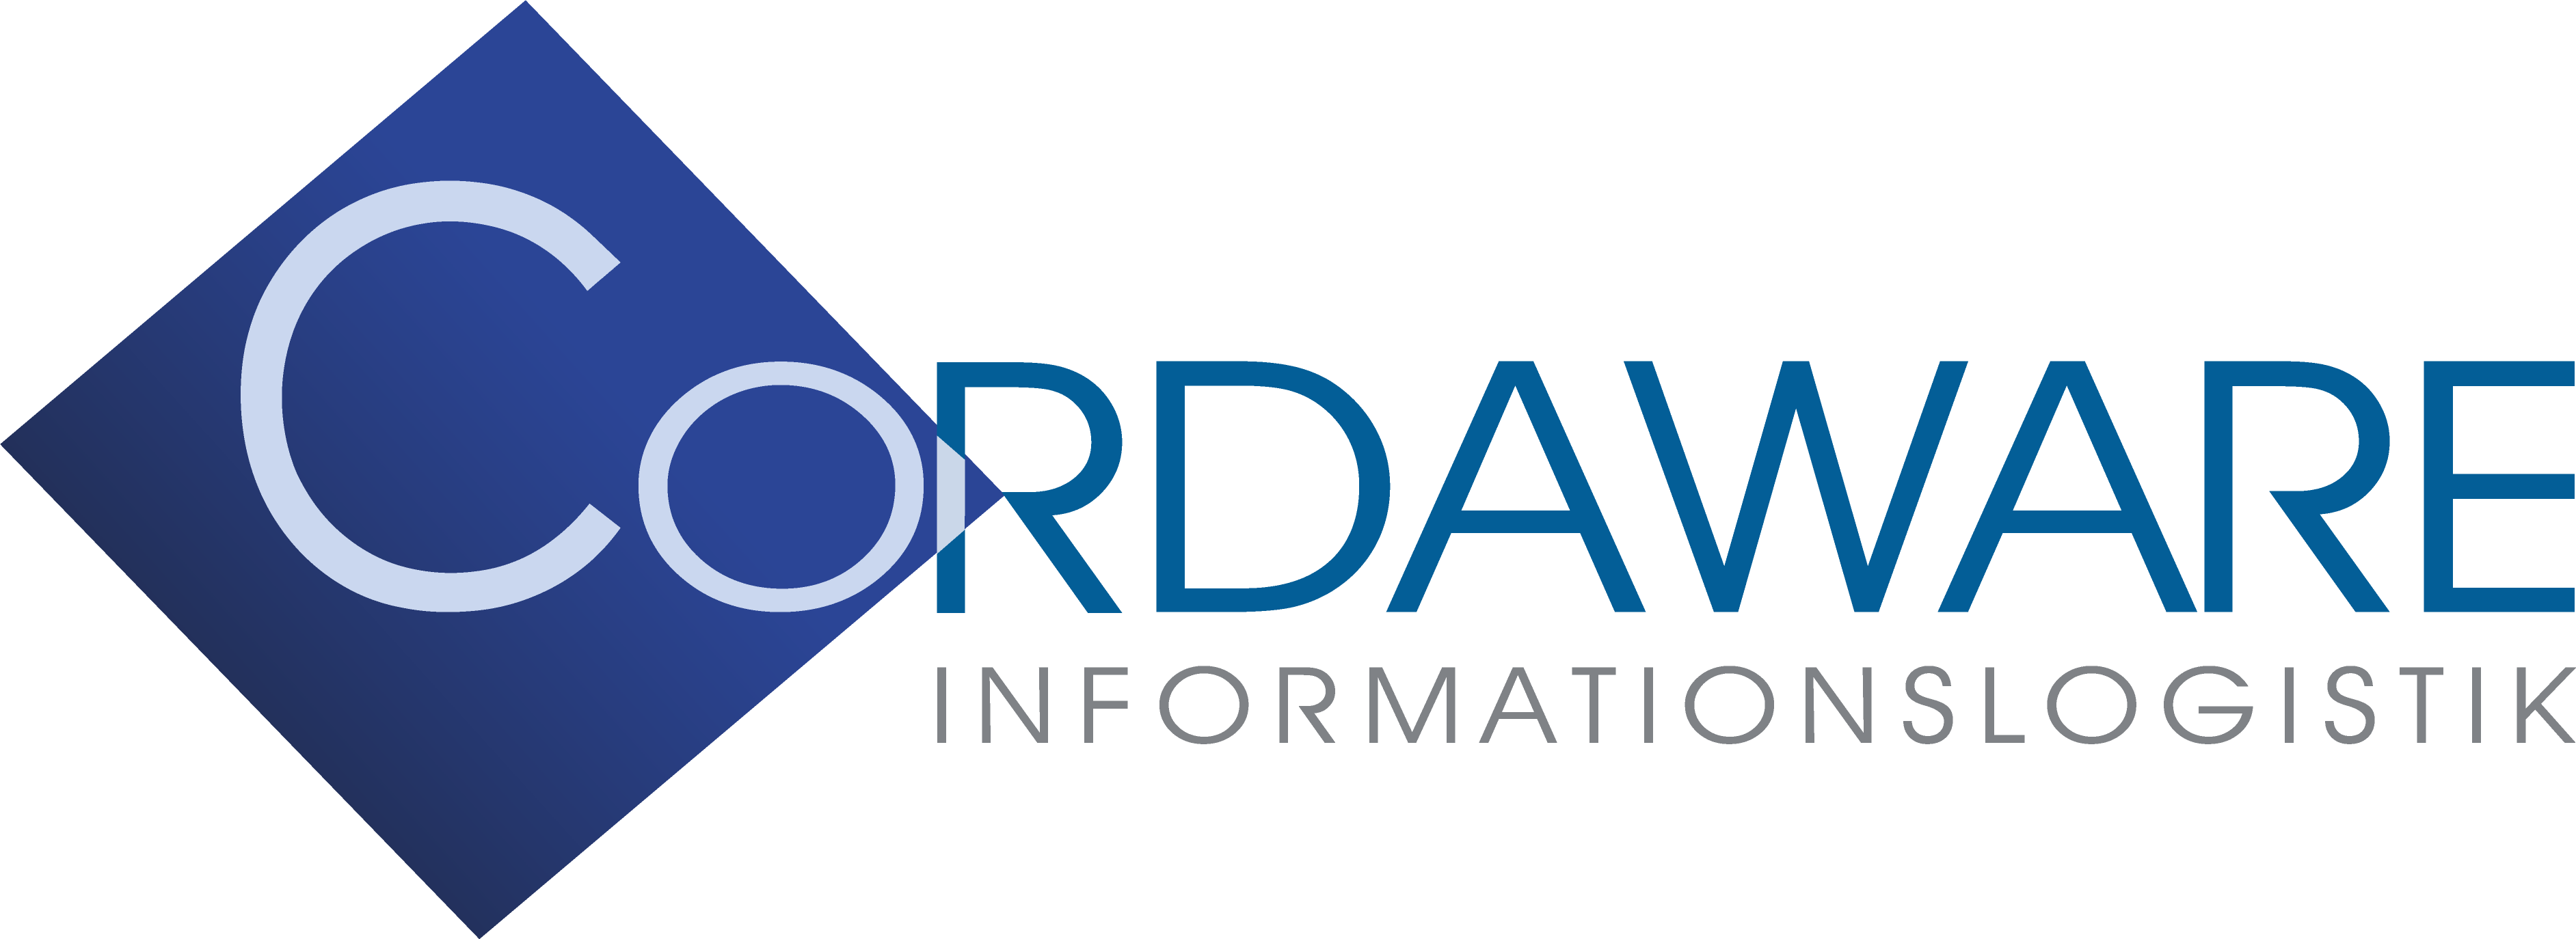 cordaware Logo